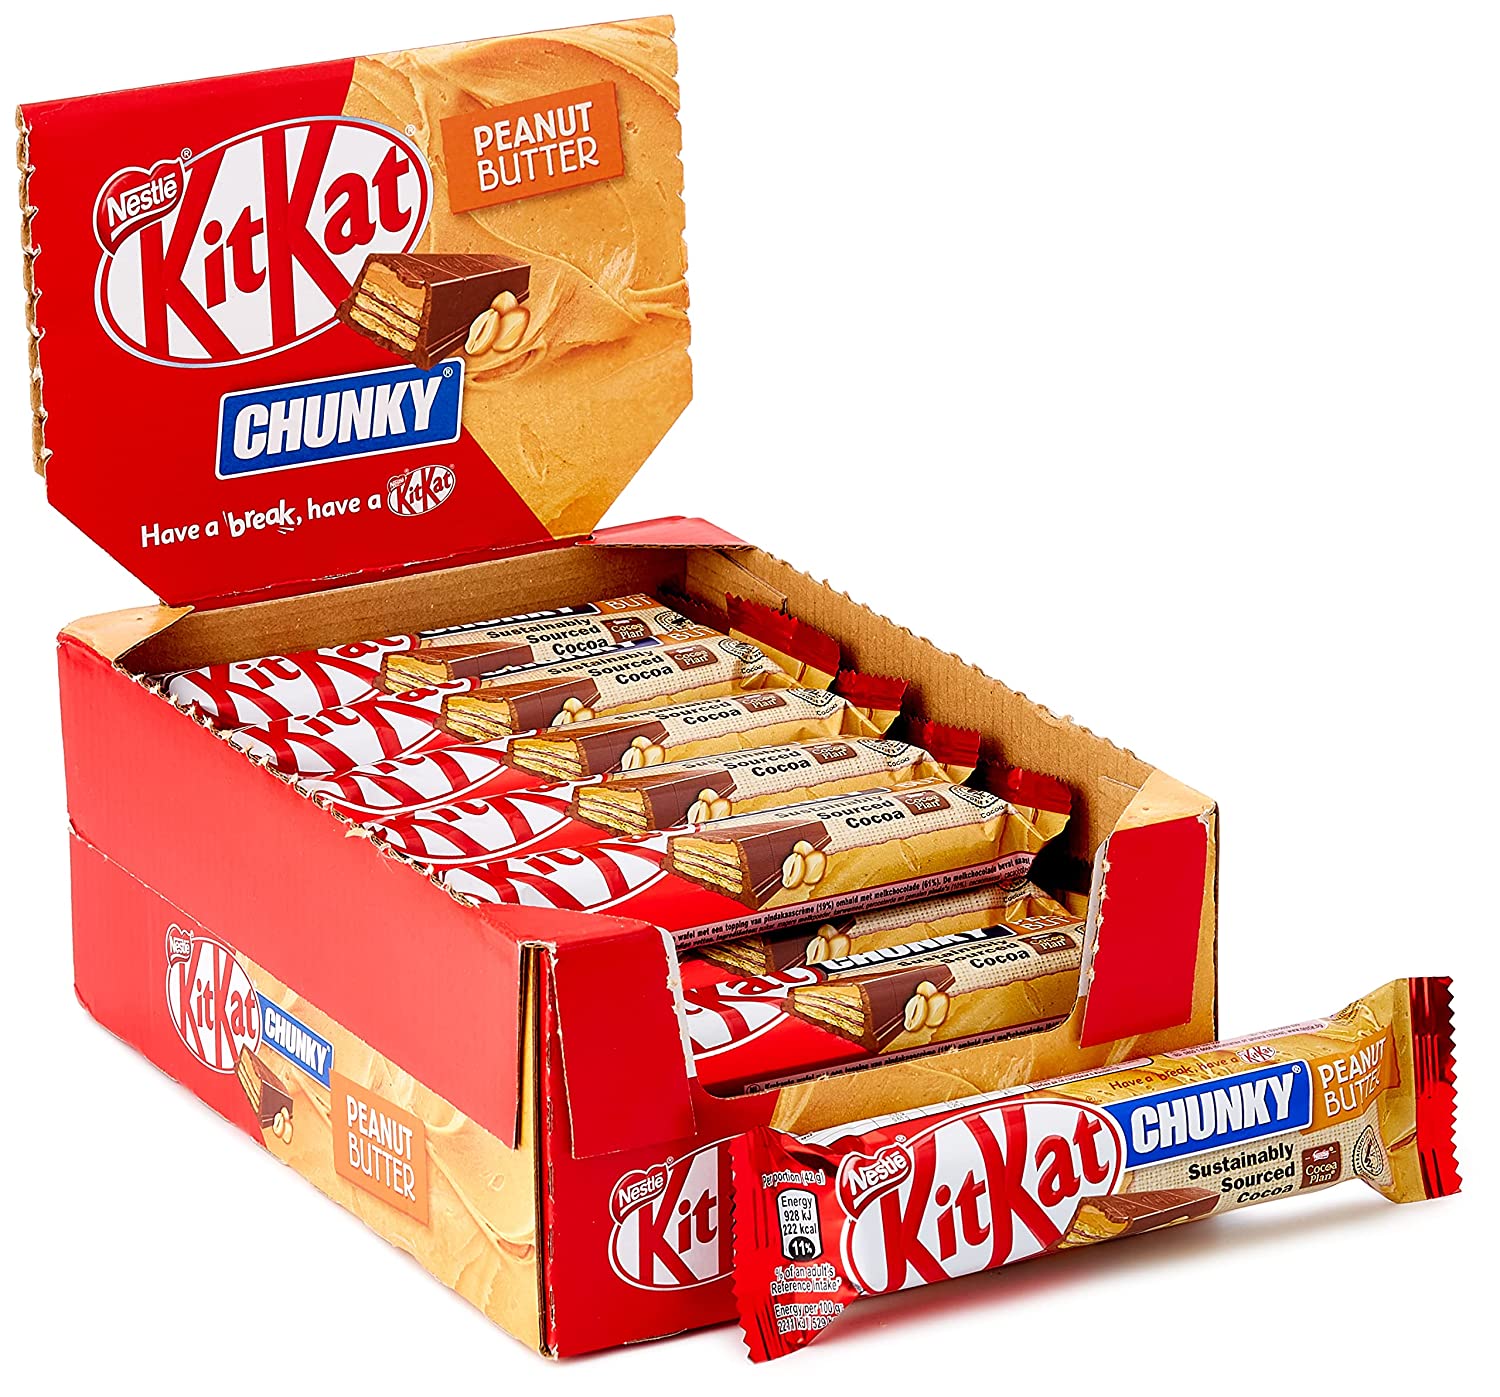 Thumbnail 🍫 24er Pack KitKat Chunky Peanut Butter-Riegel für 9,49€! 👉 nur 40 Cent pro Riegel